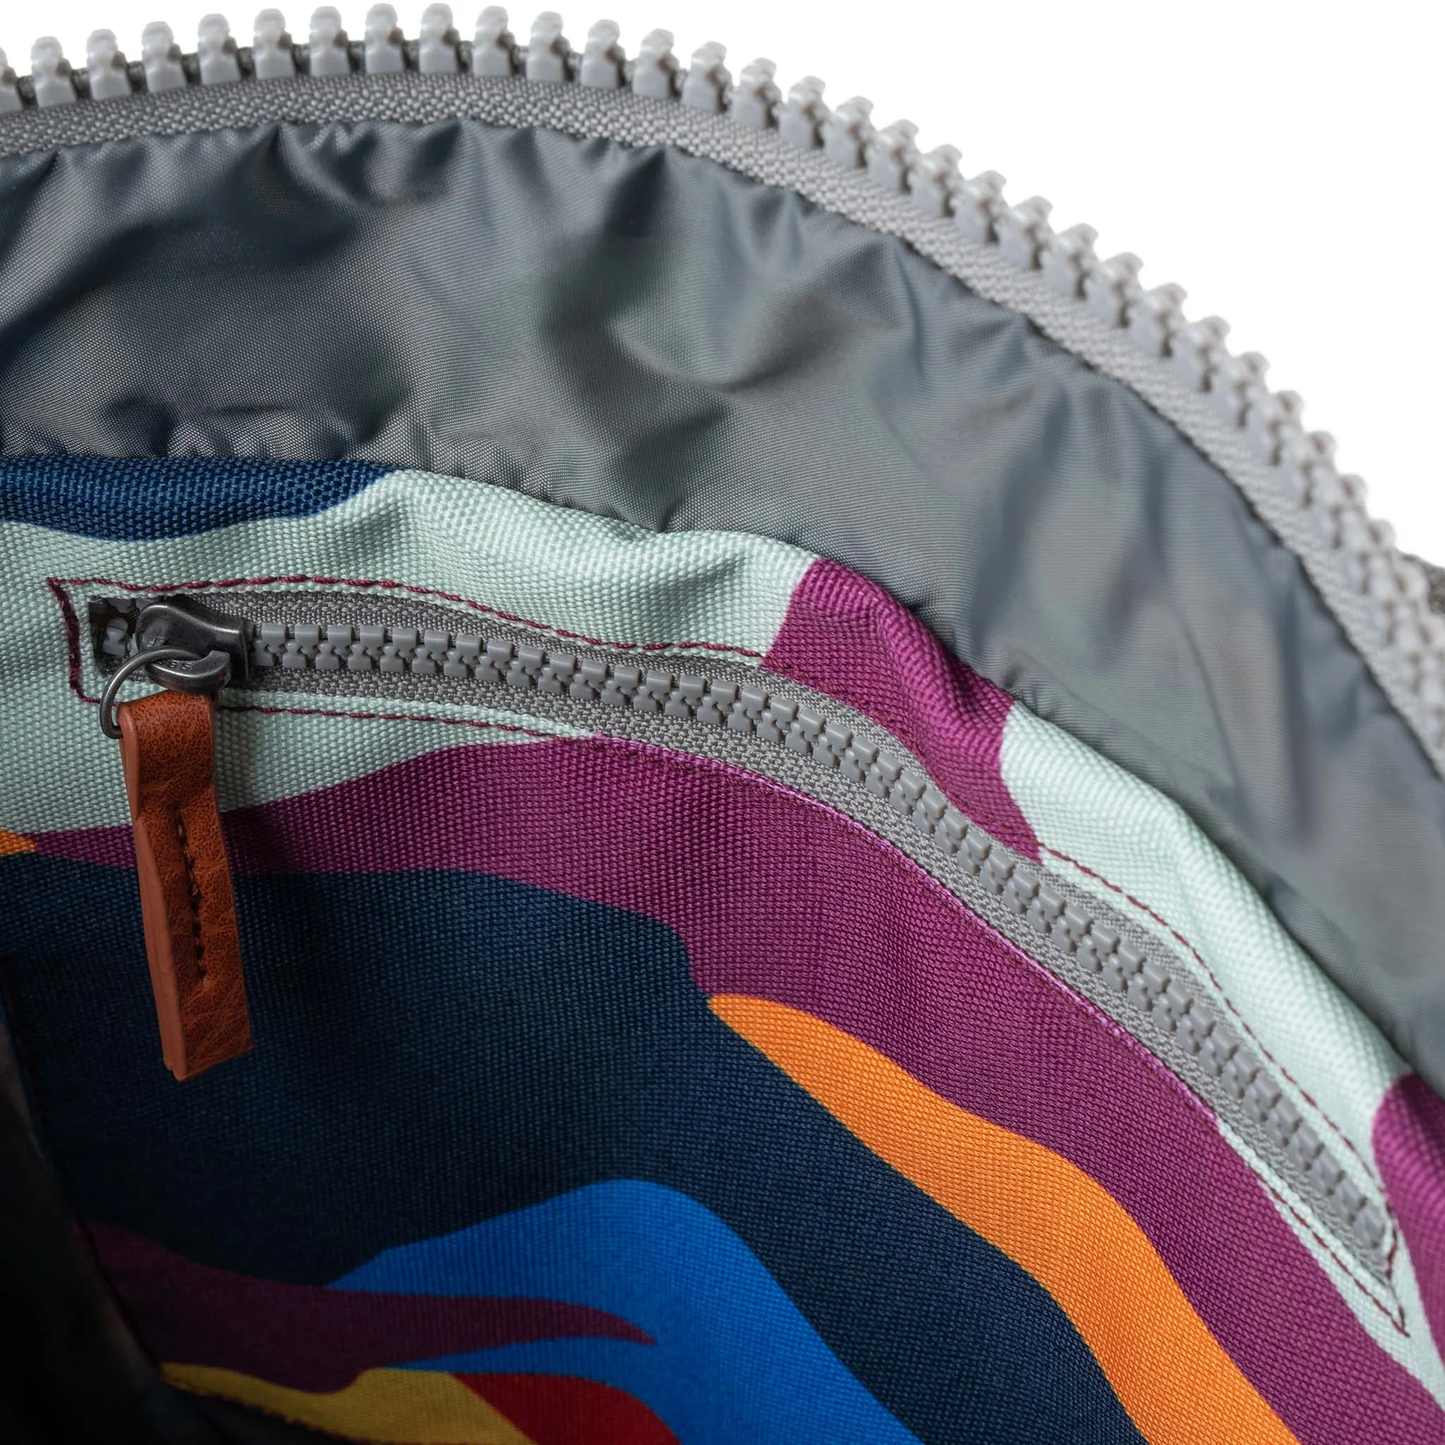 Canfield B (Recycled Canvas) Medium Bag - Bold Camo zipper detail